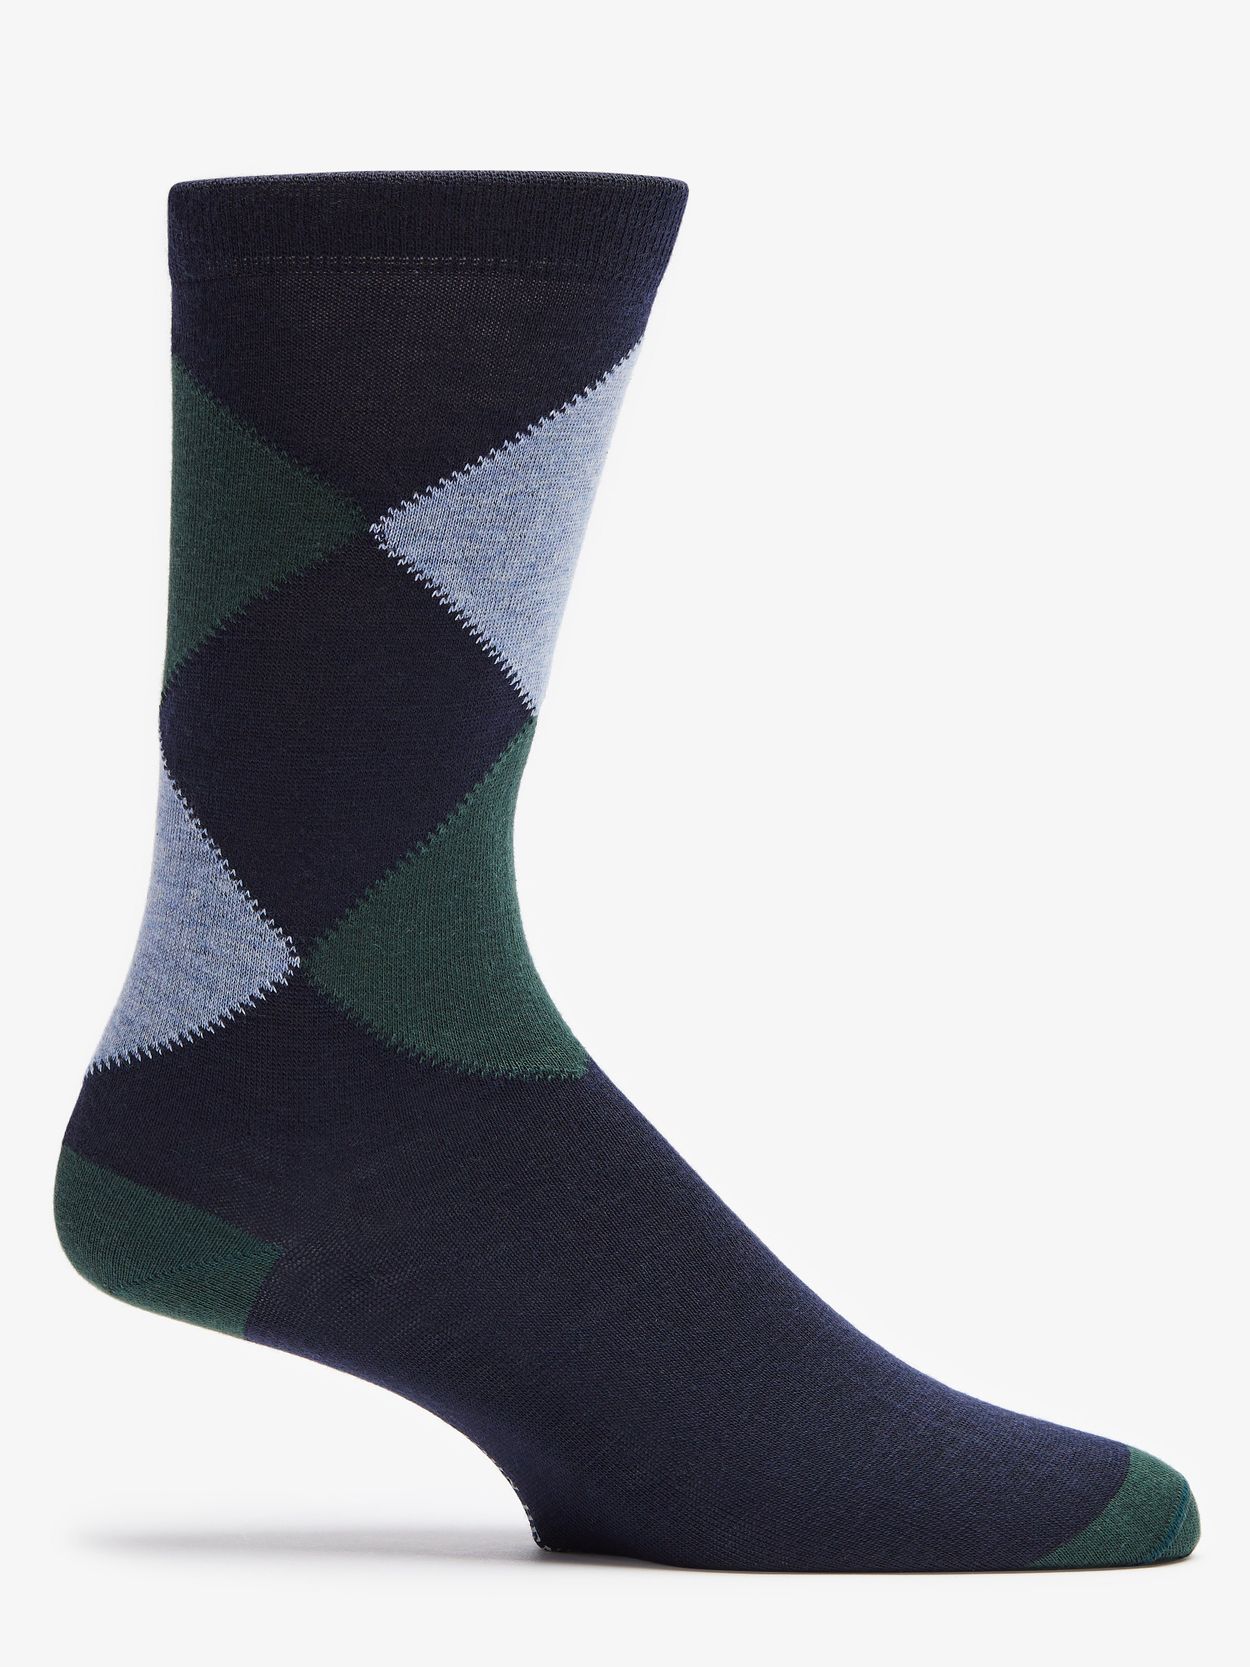 Blue & Green Merino Socks